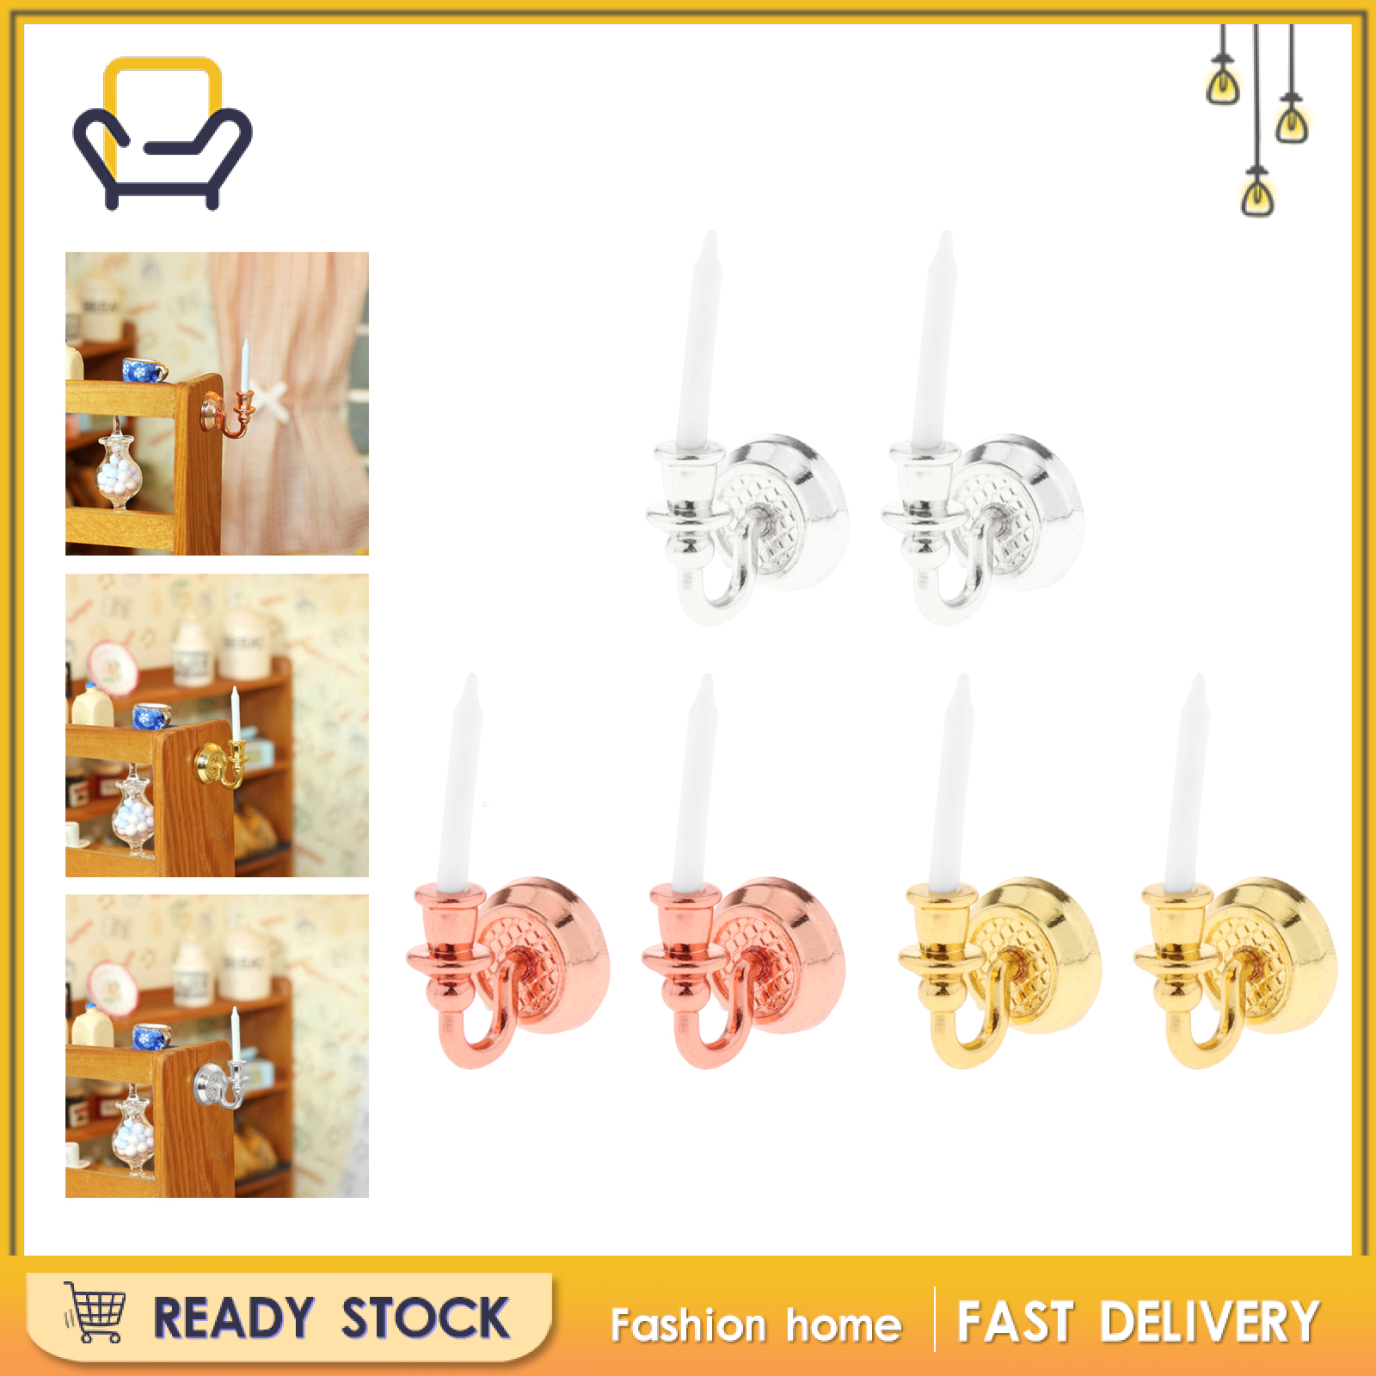 【Fashion home】1:6 1/12 Mini Doll House Wall Candle Holder Scene Model DIY Decor Props gold